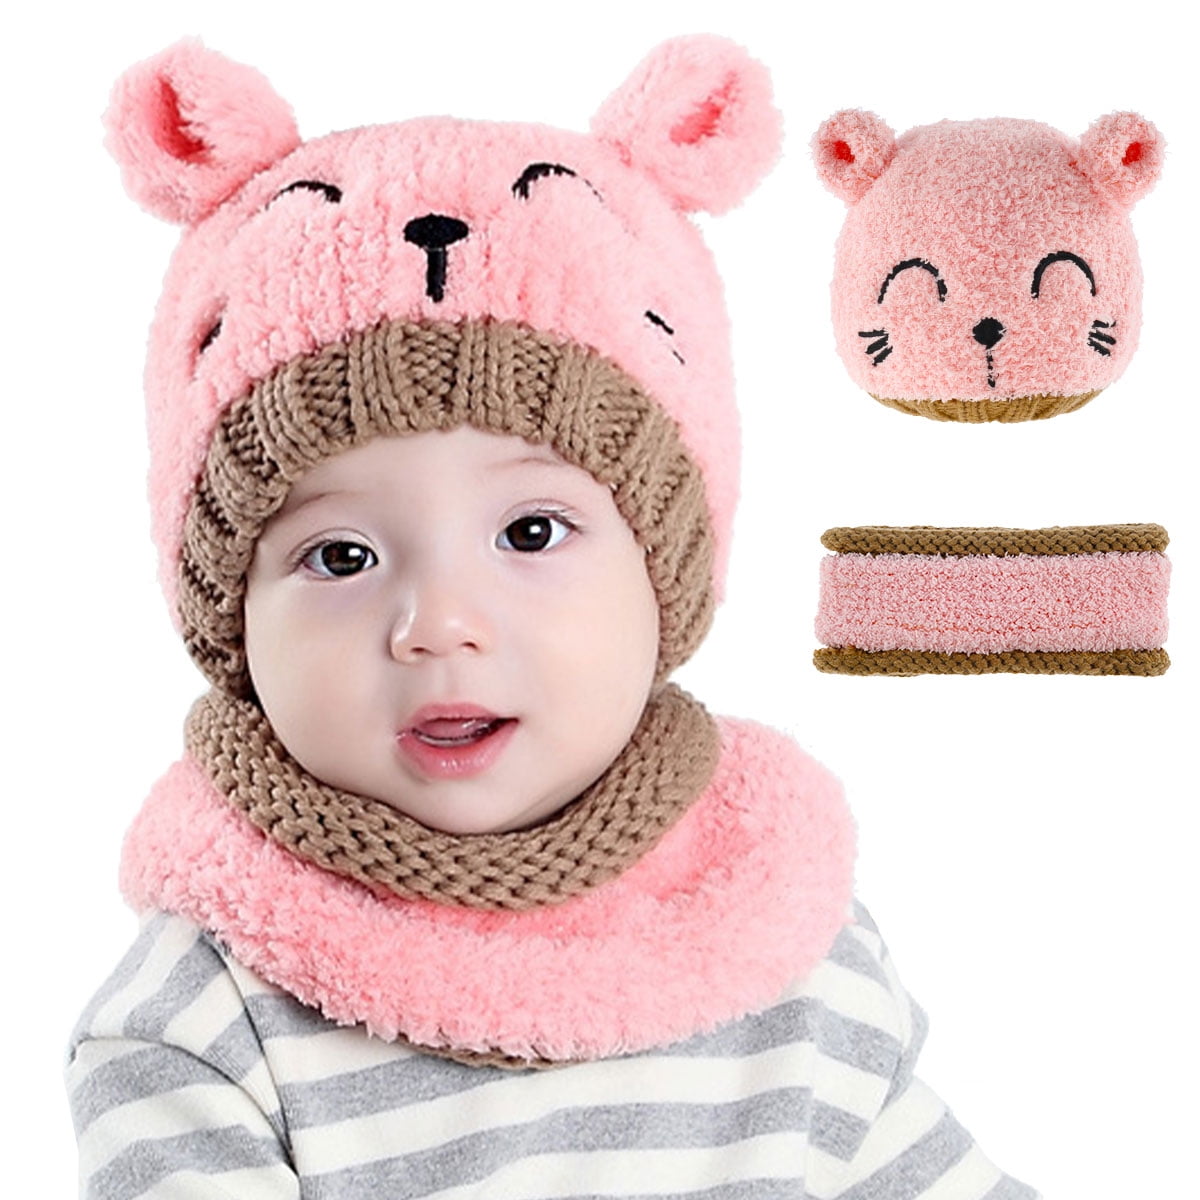 Baby Toddler Kids Boy Girl Winter Warm Knitted Crochet Beanie Hat Cap Scarf Set 